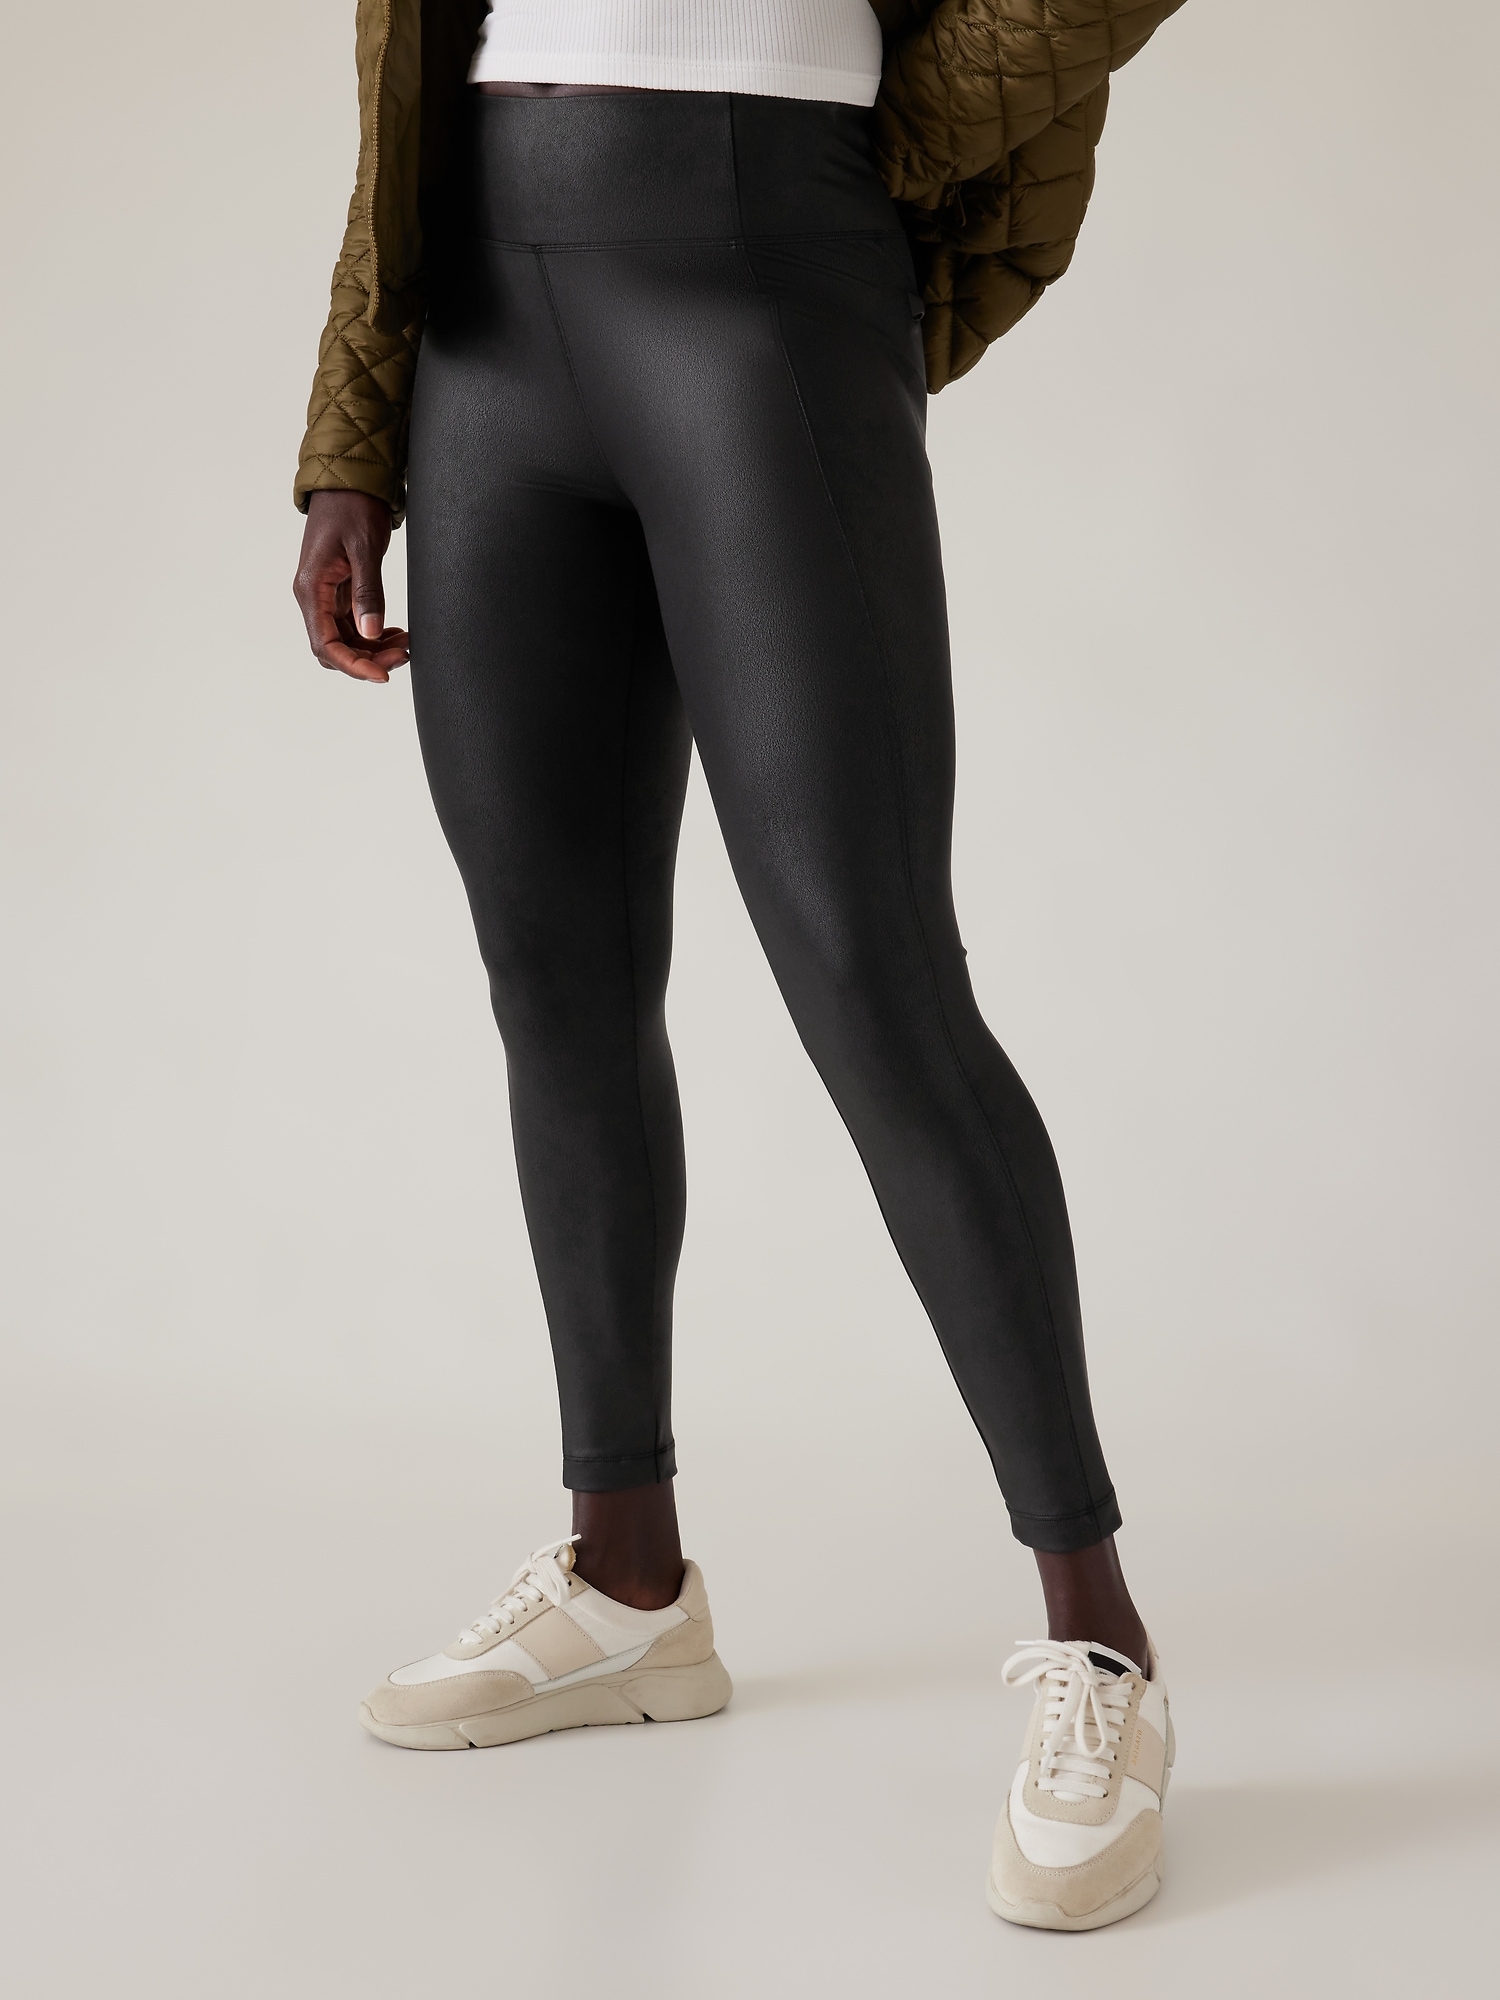 Athleta black & gray Sonar Tight Magnetic workout yoga sporty leggings,  Size M